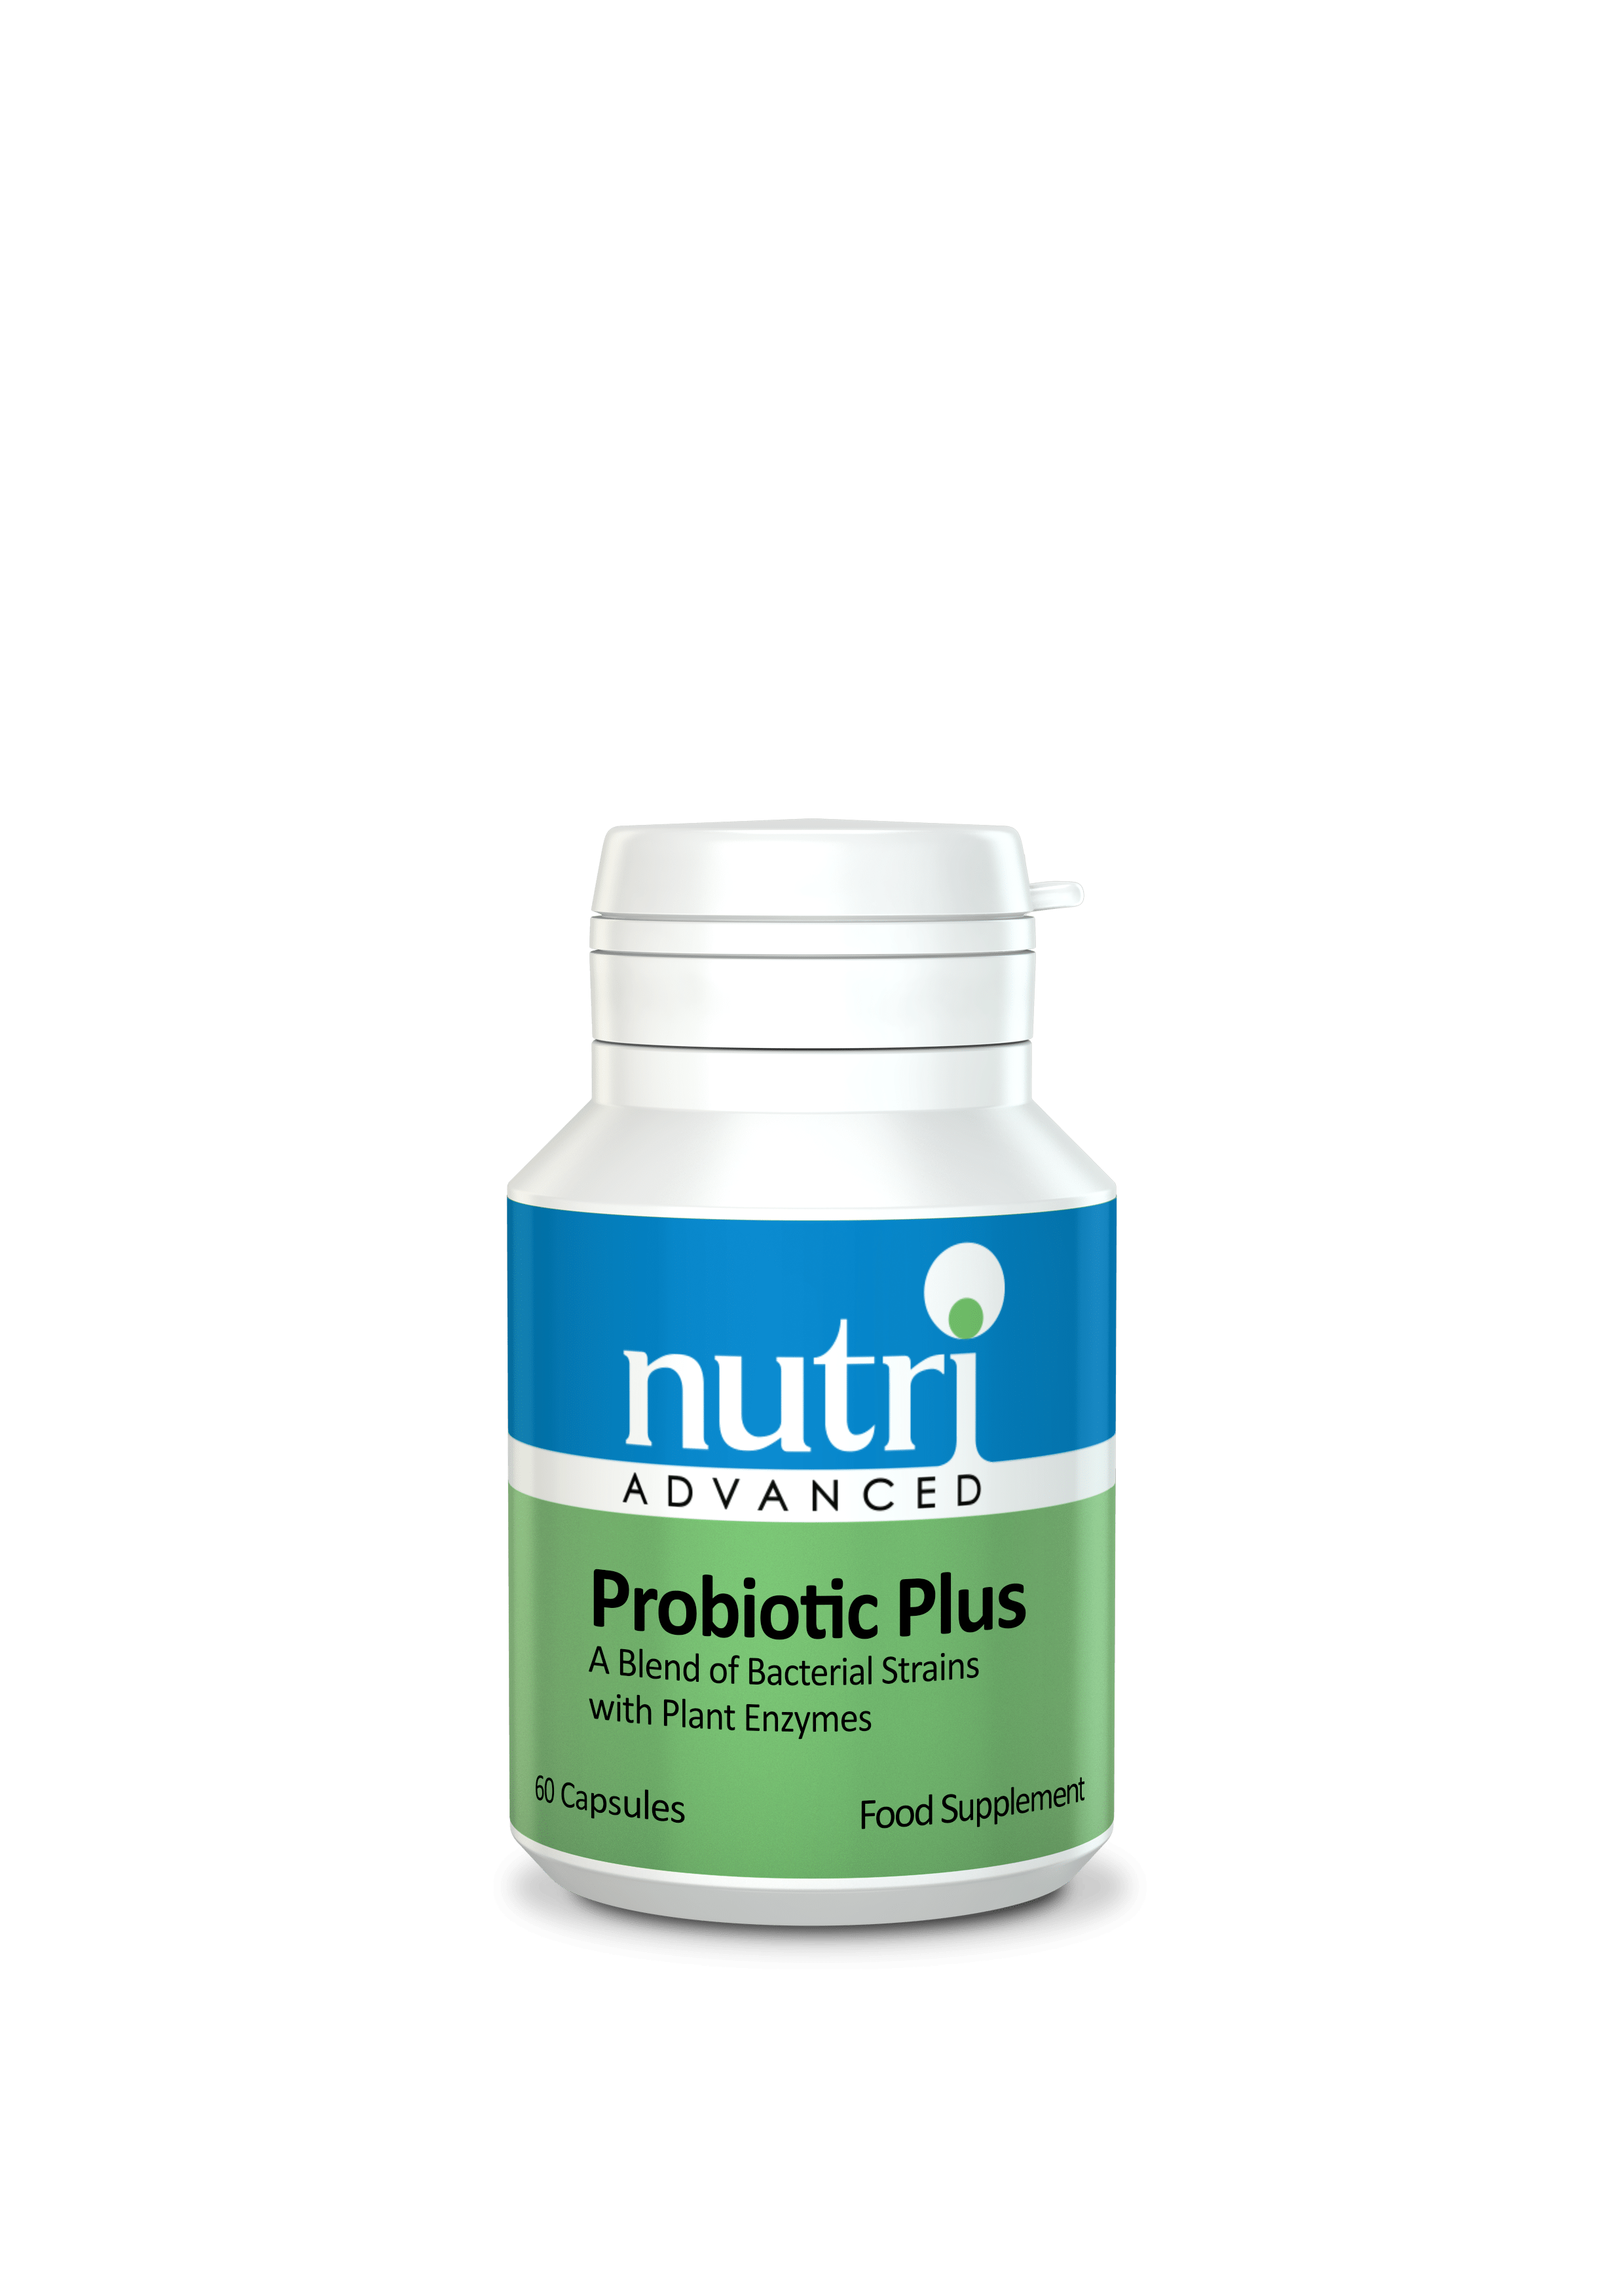 Advanced Probiotic Supplement